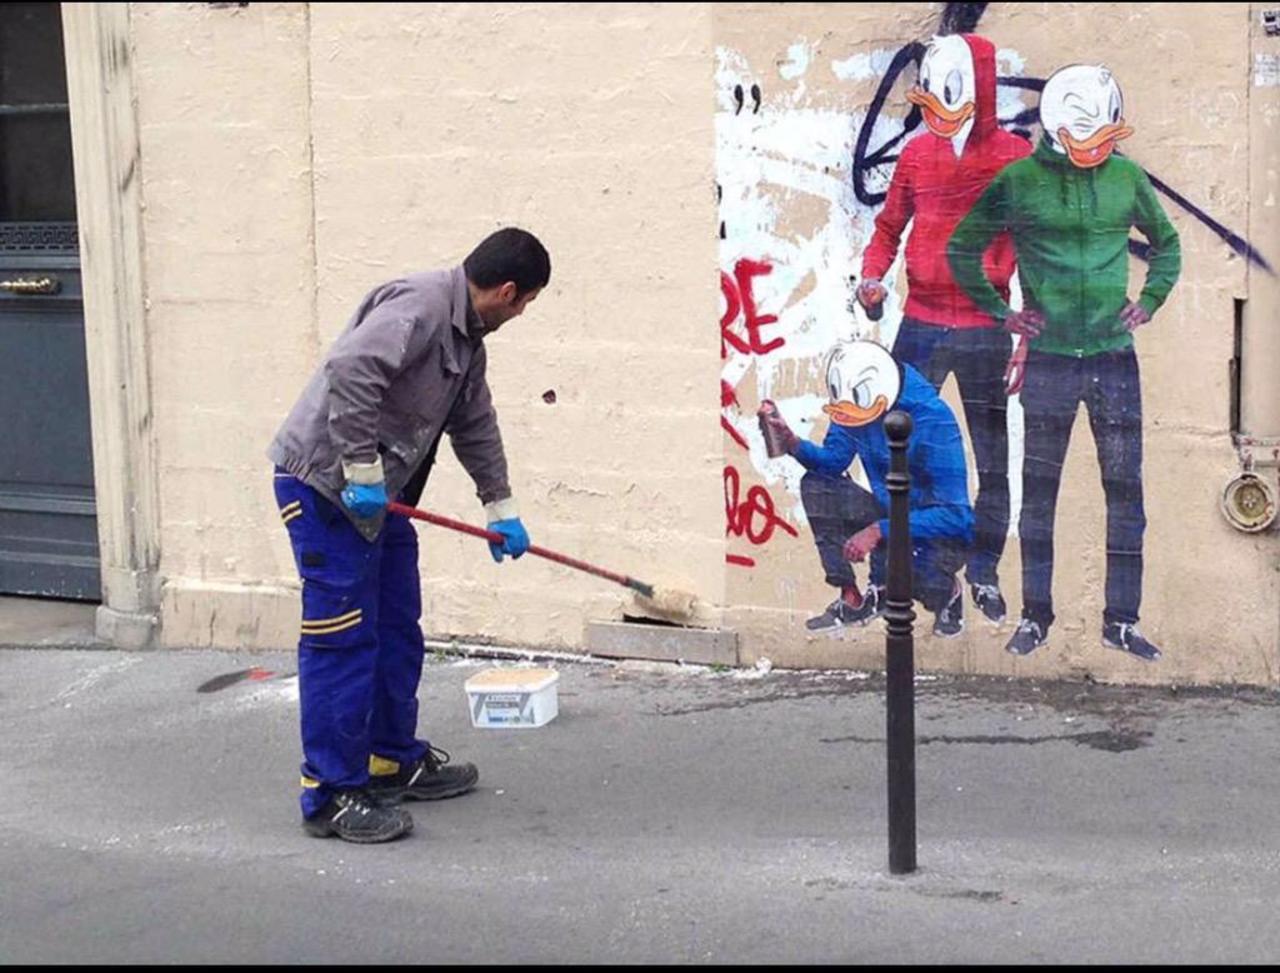 RT @richardbanfa: #graffiti removalist becomes part of the #streetart #mural in #paris #switch #bedifferent #art #arte http://t.co/zKn7DxspZi